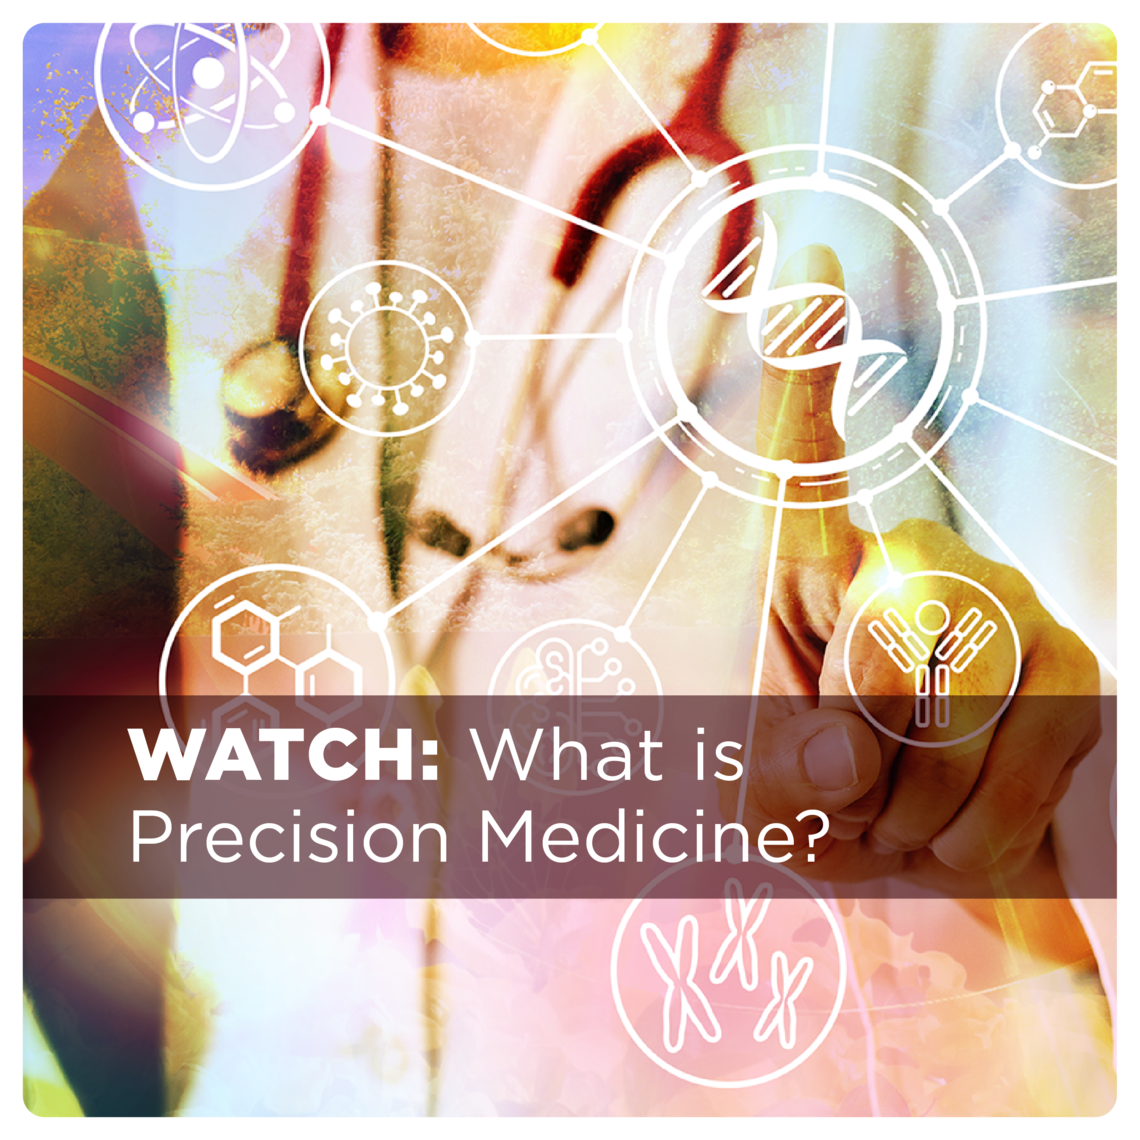 Watch a video that explains Precision Medicine 